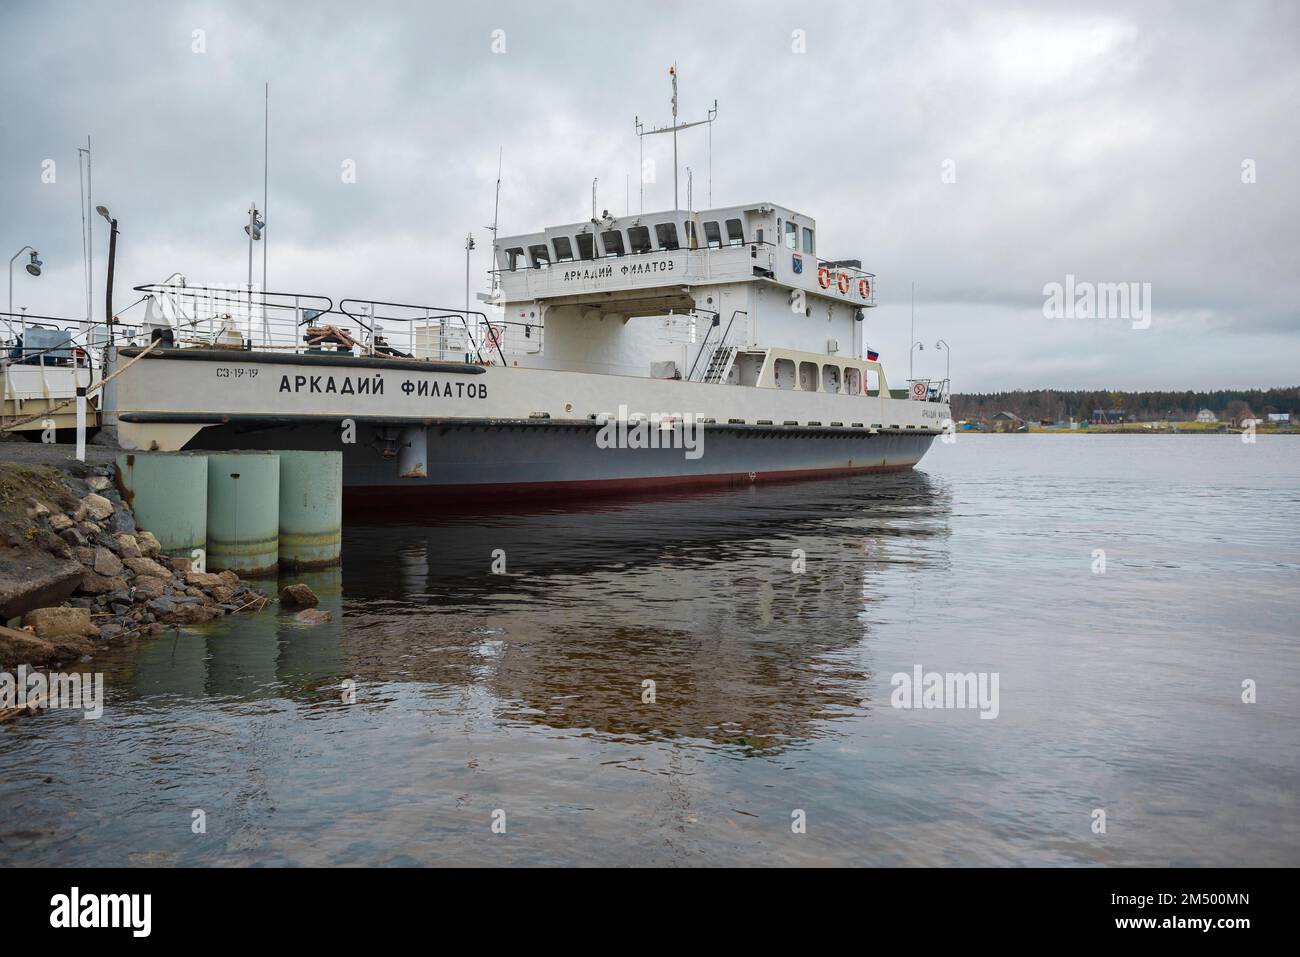 VOZNESENYE, RUSSIA - NOVEMBER 04, 2018: Ferry of 'Arkady Filatov' on the pier on a cloudy November day Stock Photo